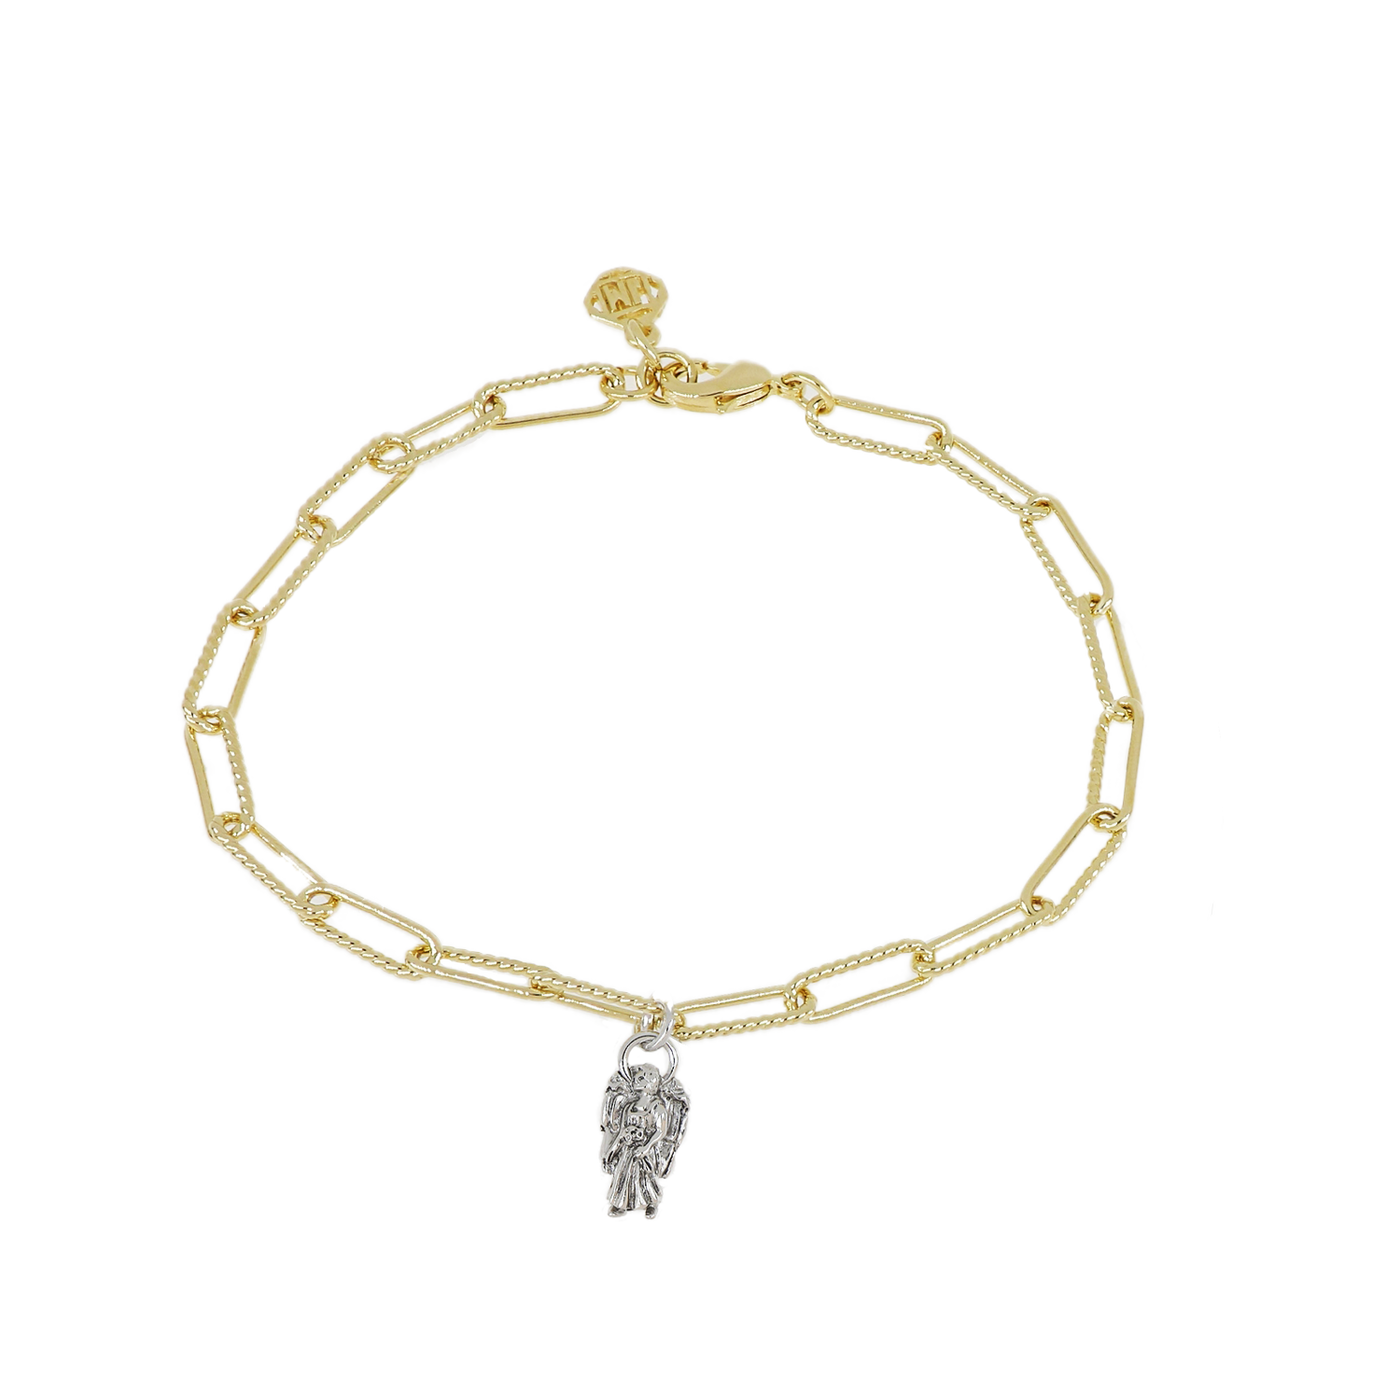 Diamante - Charm Bracelet Angel